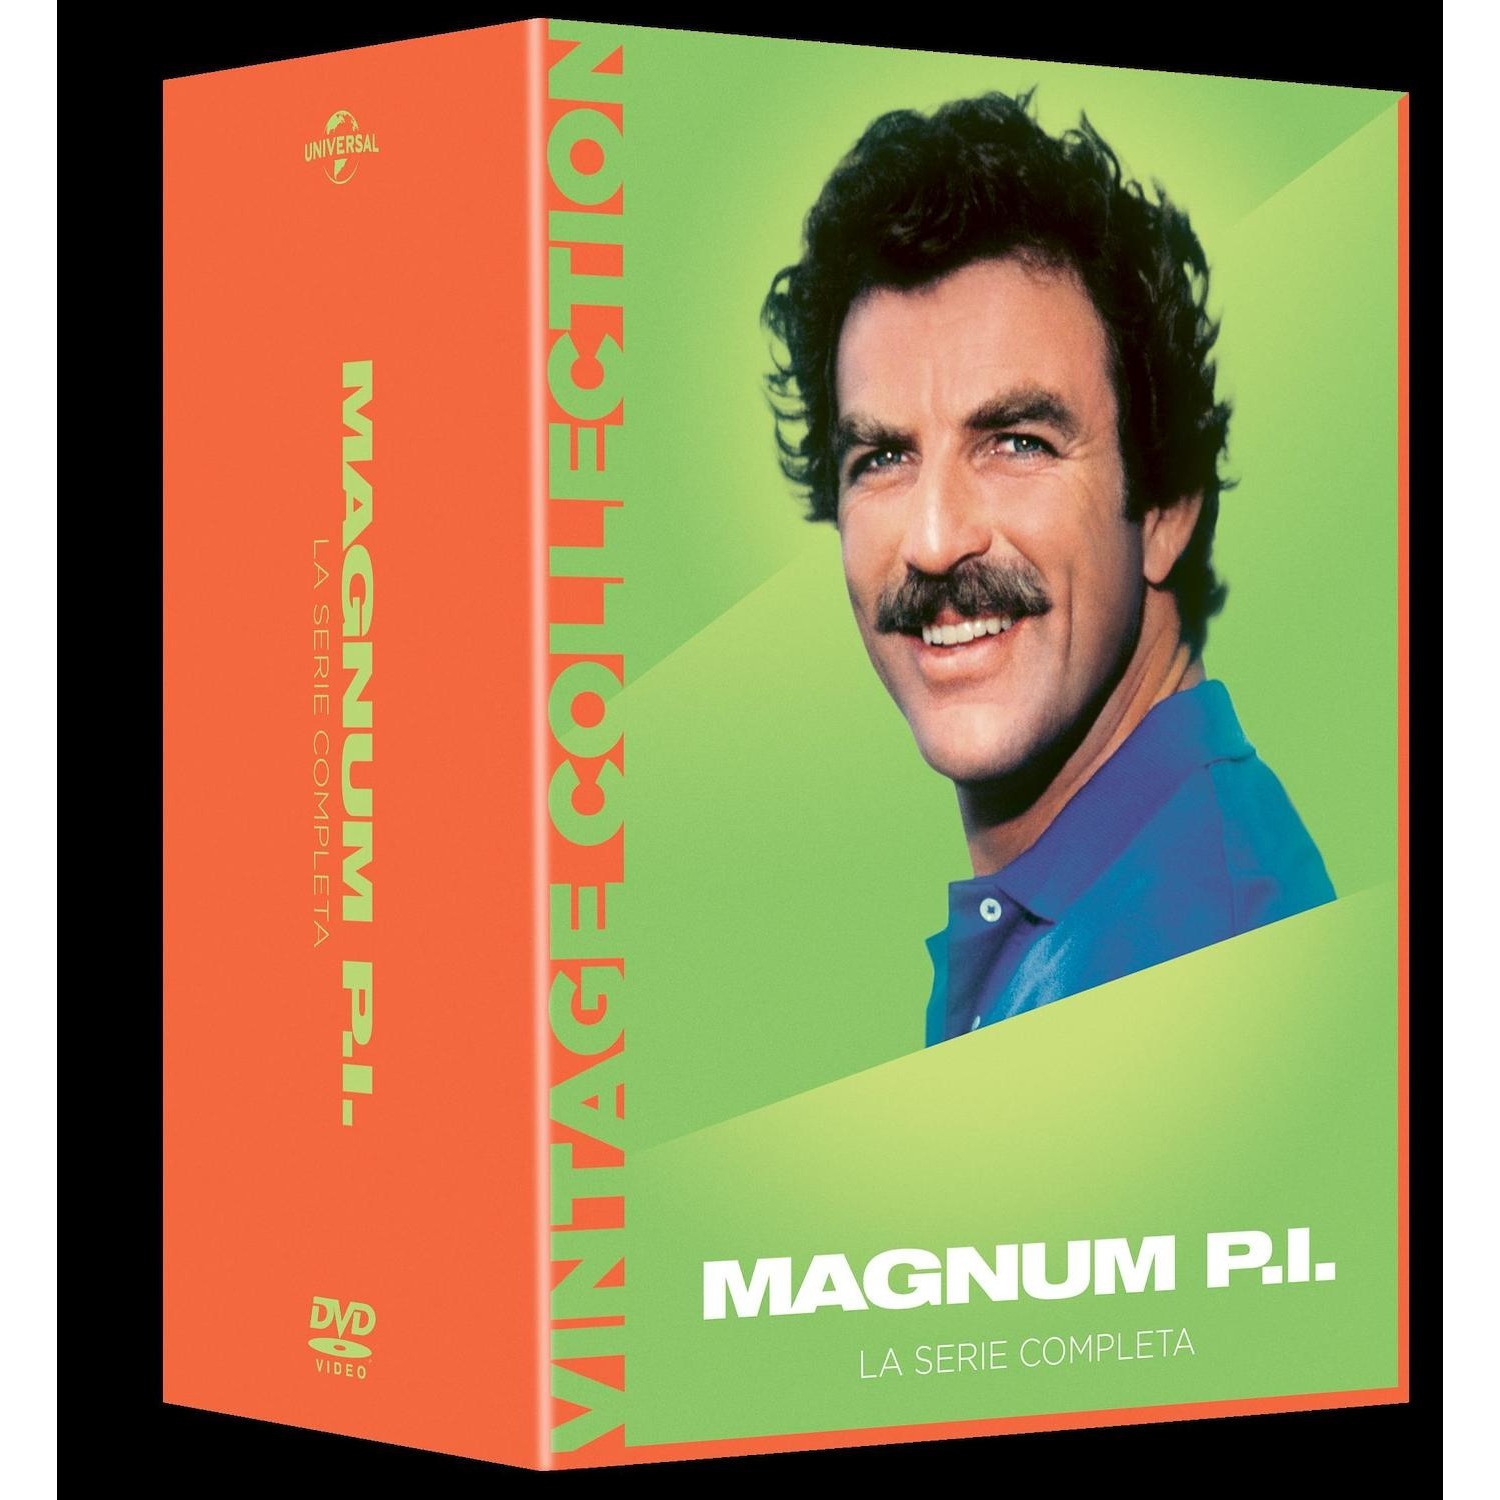 Immagine per Serie TV DVD Magnum P.I. 1-8 Vintage Collection da DIMOStore